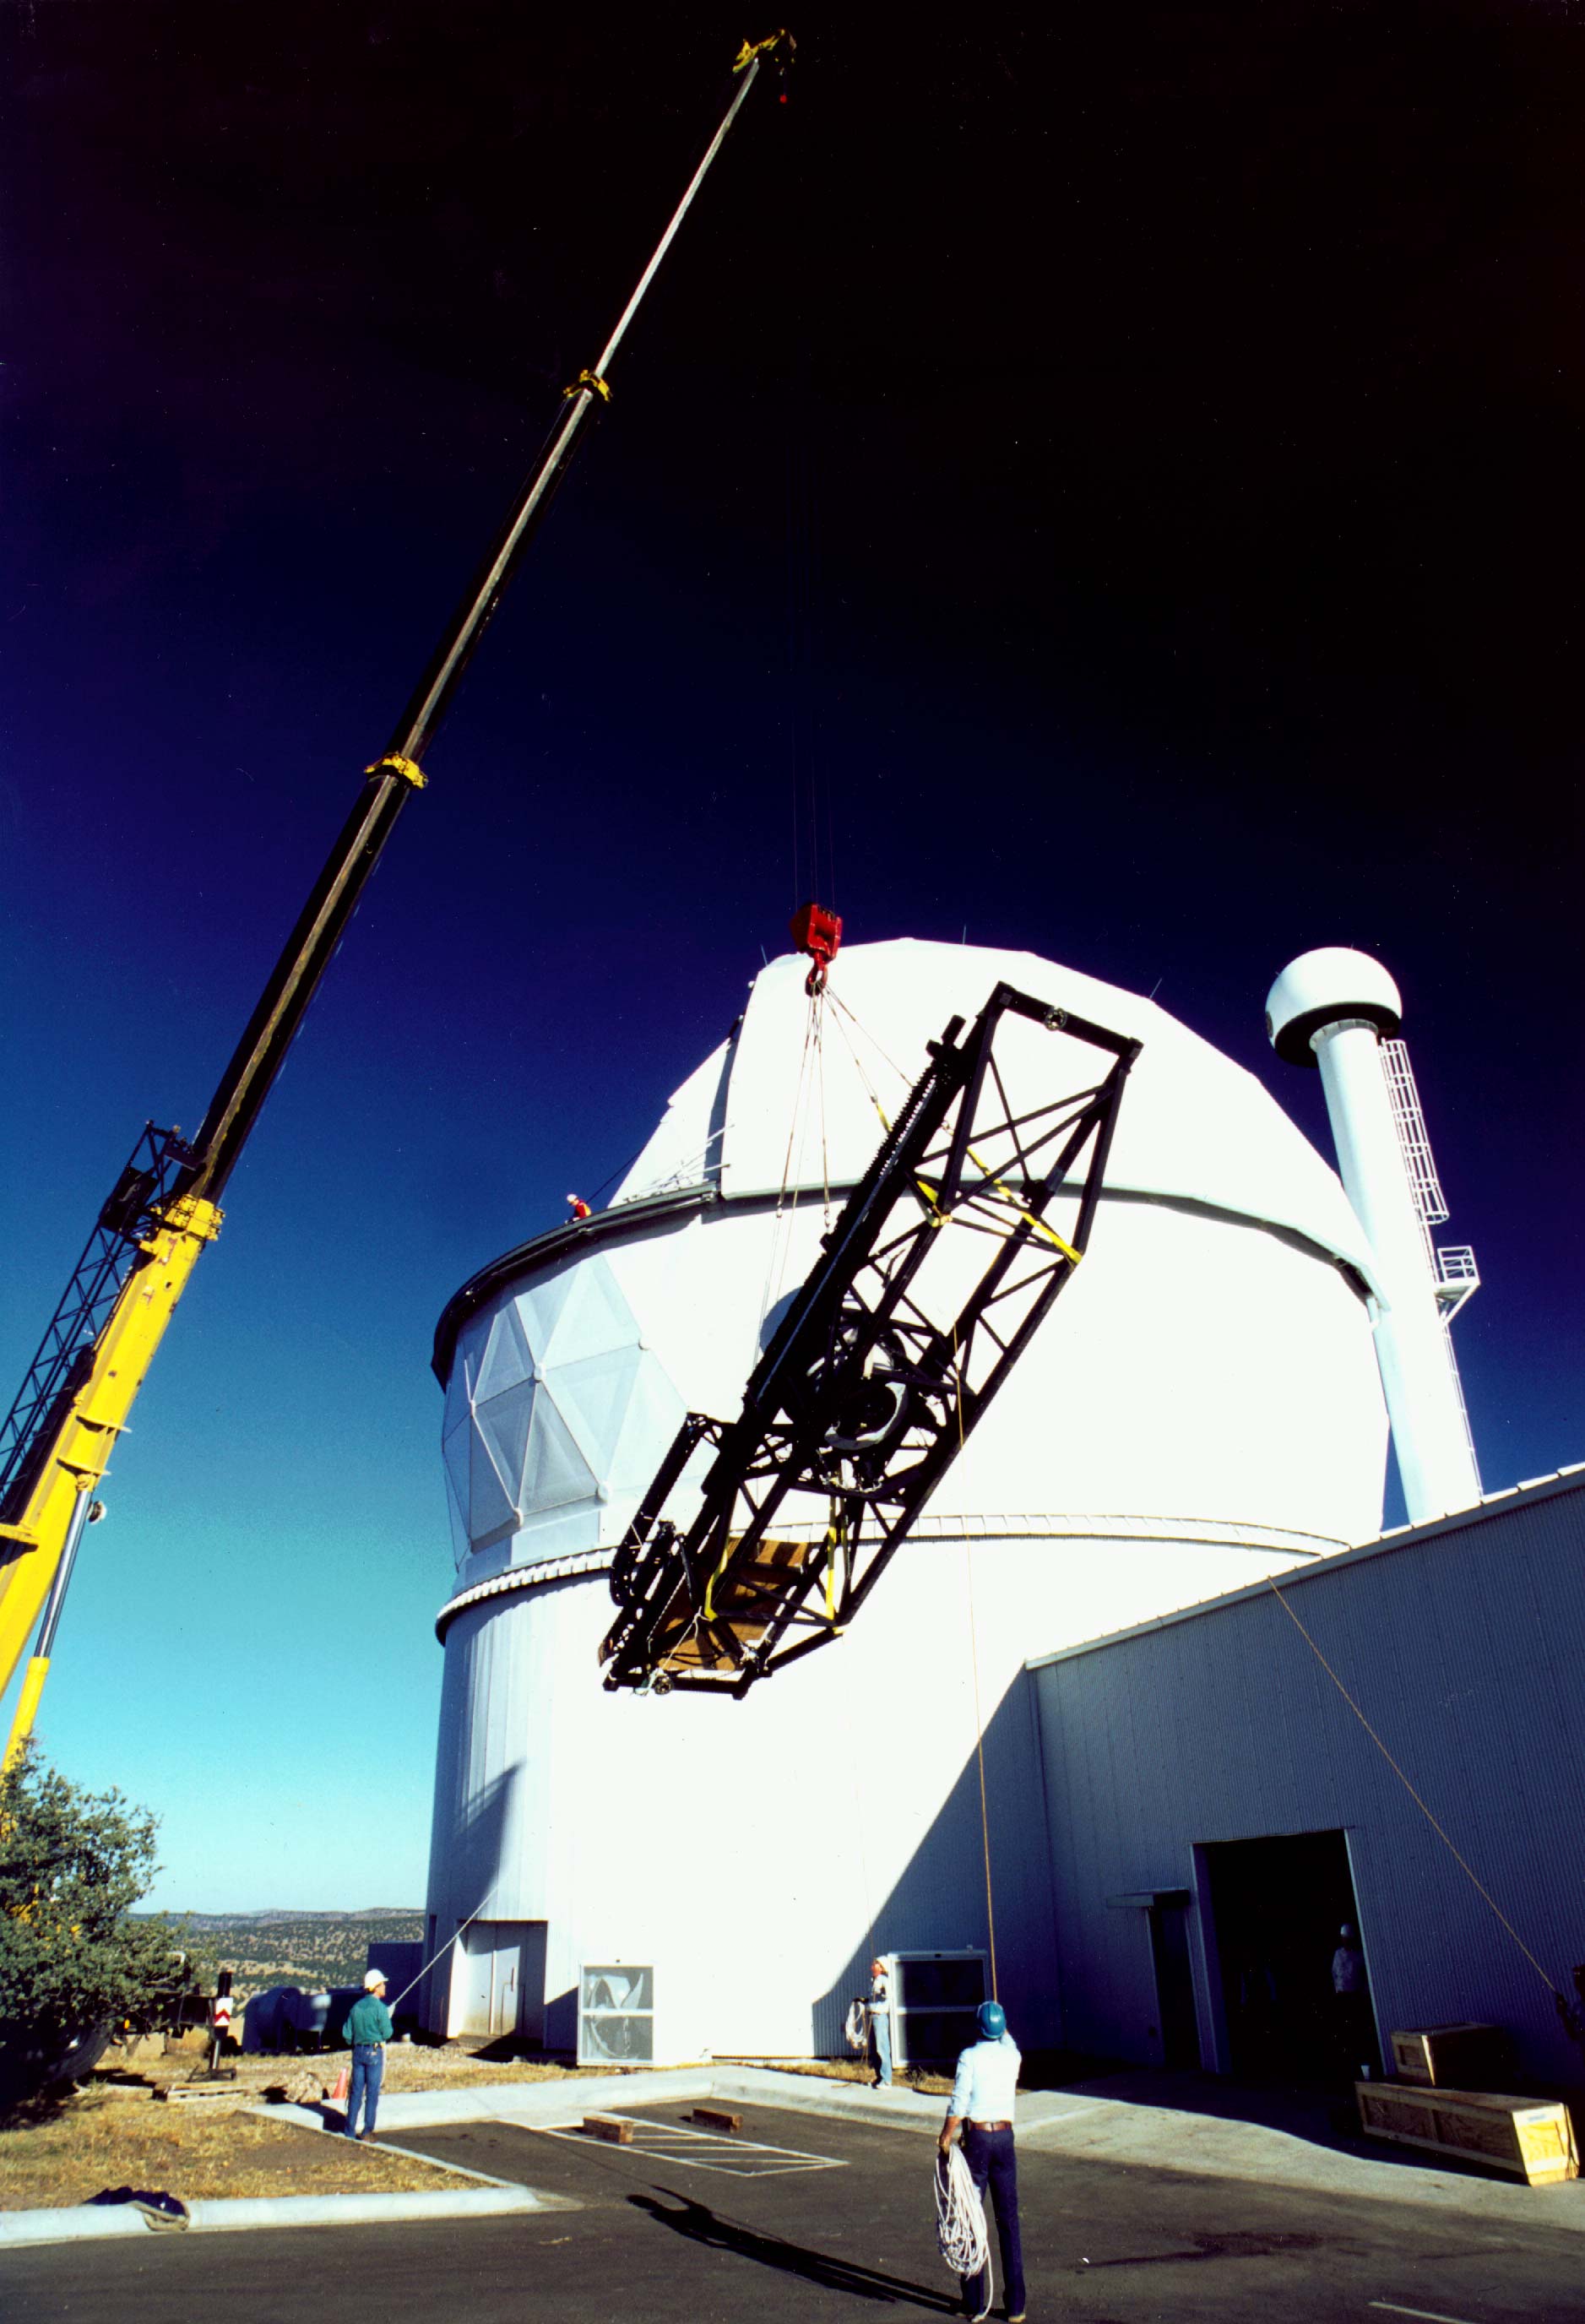 HET: The New Largest Optical Telescope